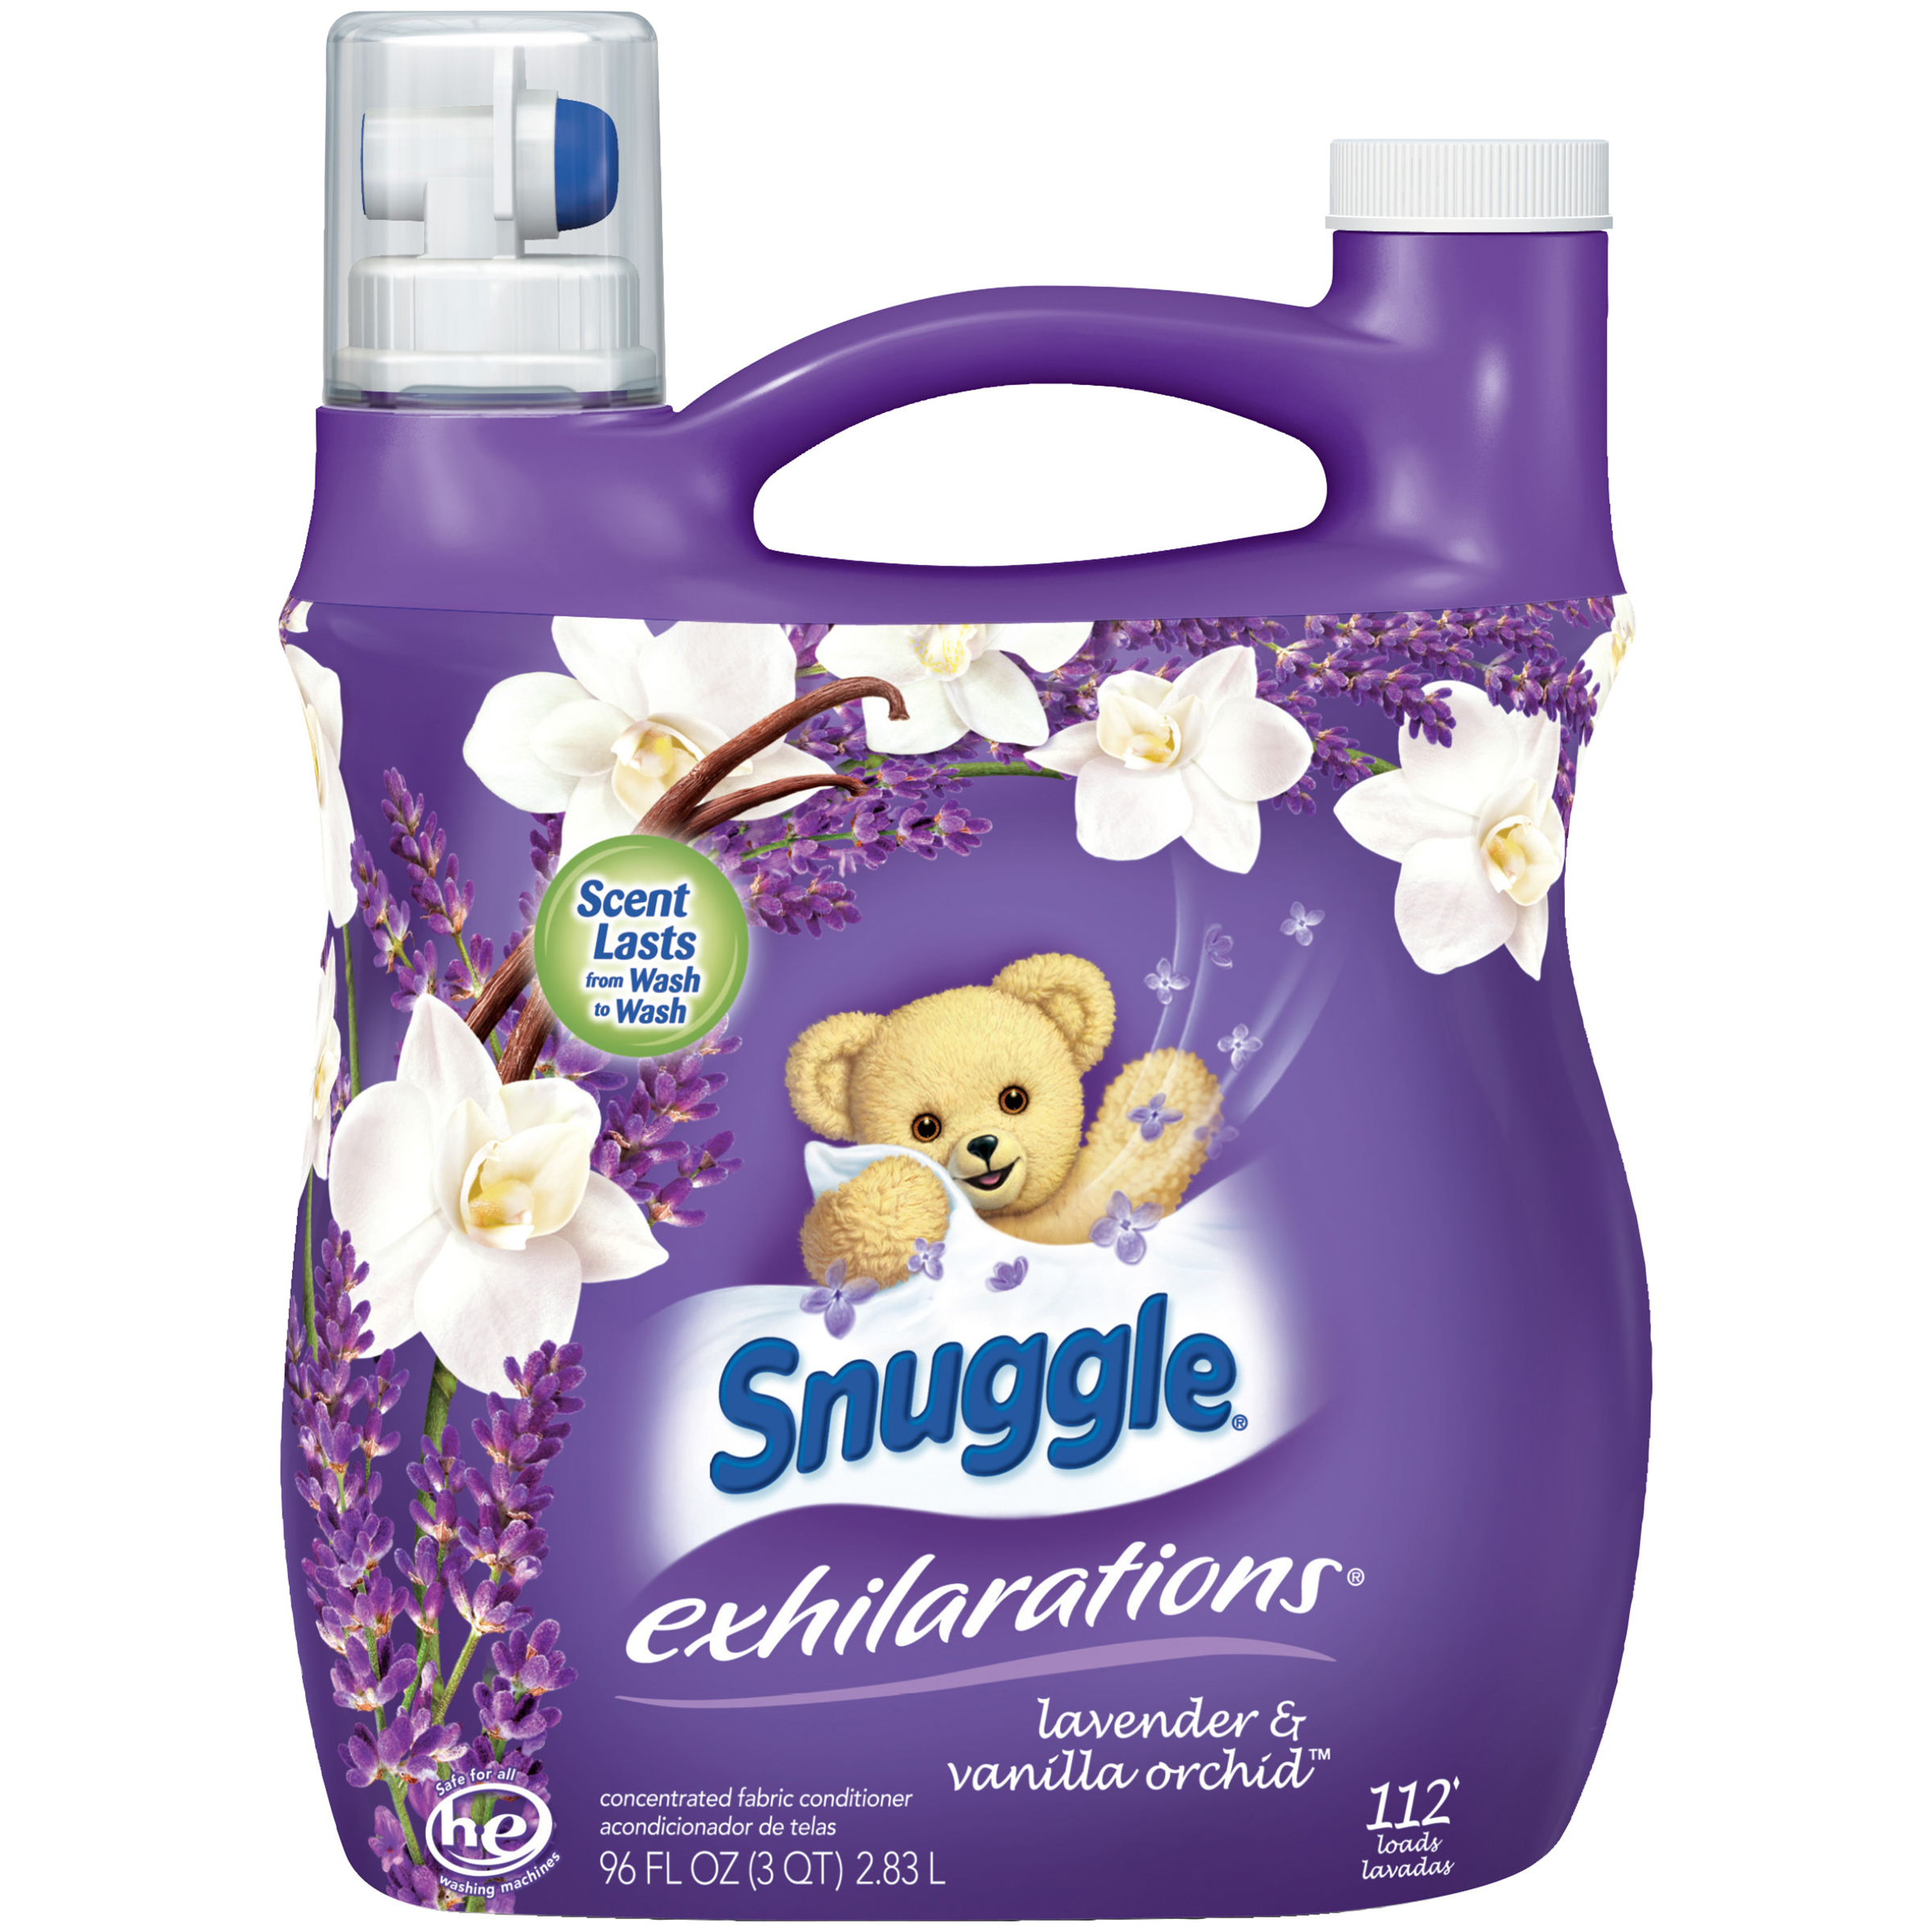 Snuggle Liquid Fabric Softener, Lavender & Vanilla Orchid, 96 Ounce, 112 Loads - image 1 of 5